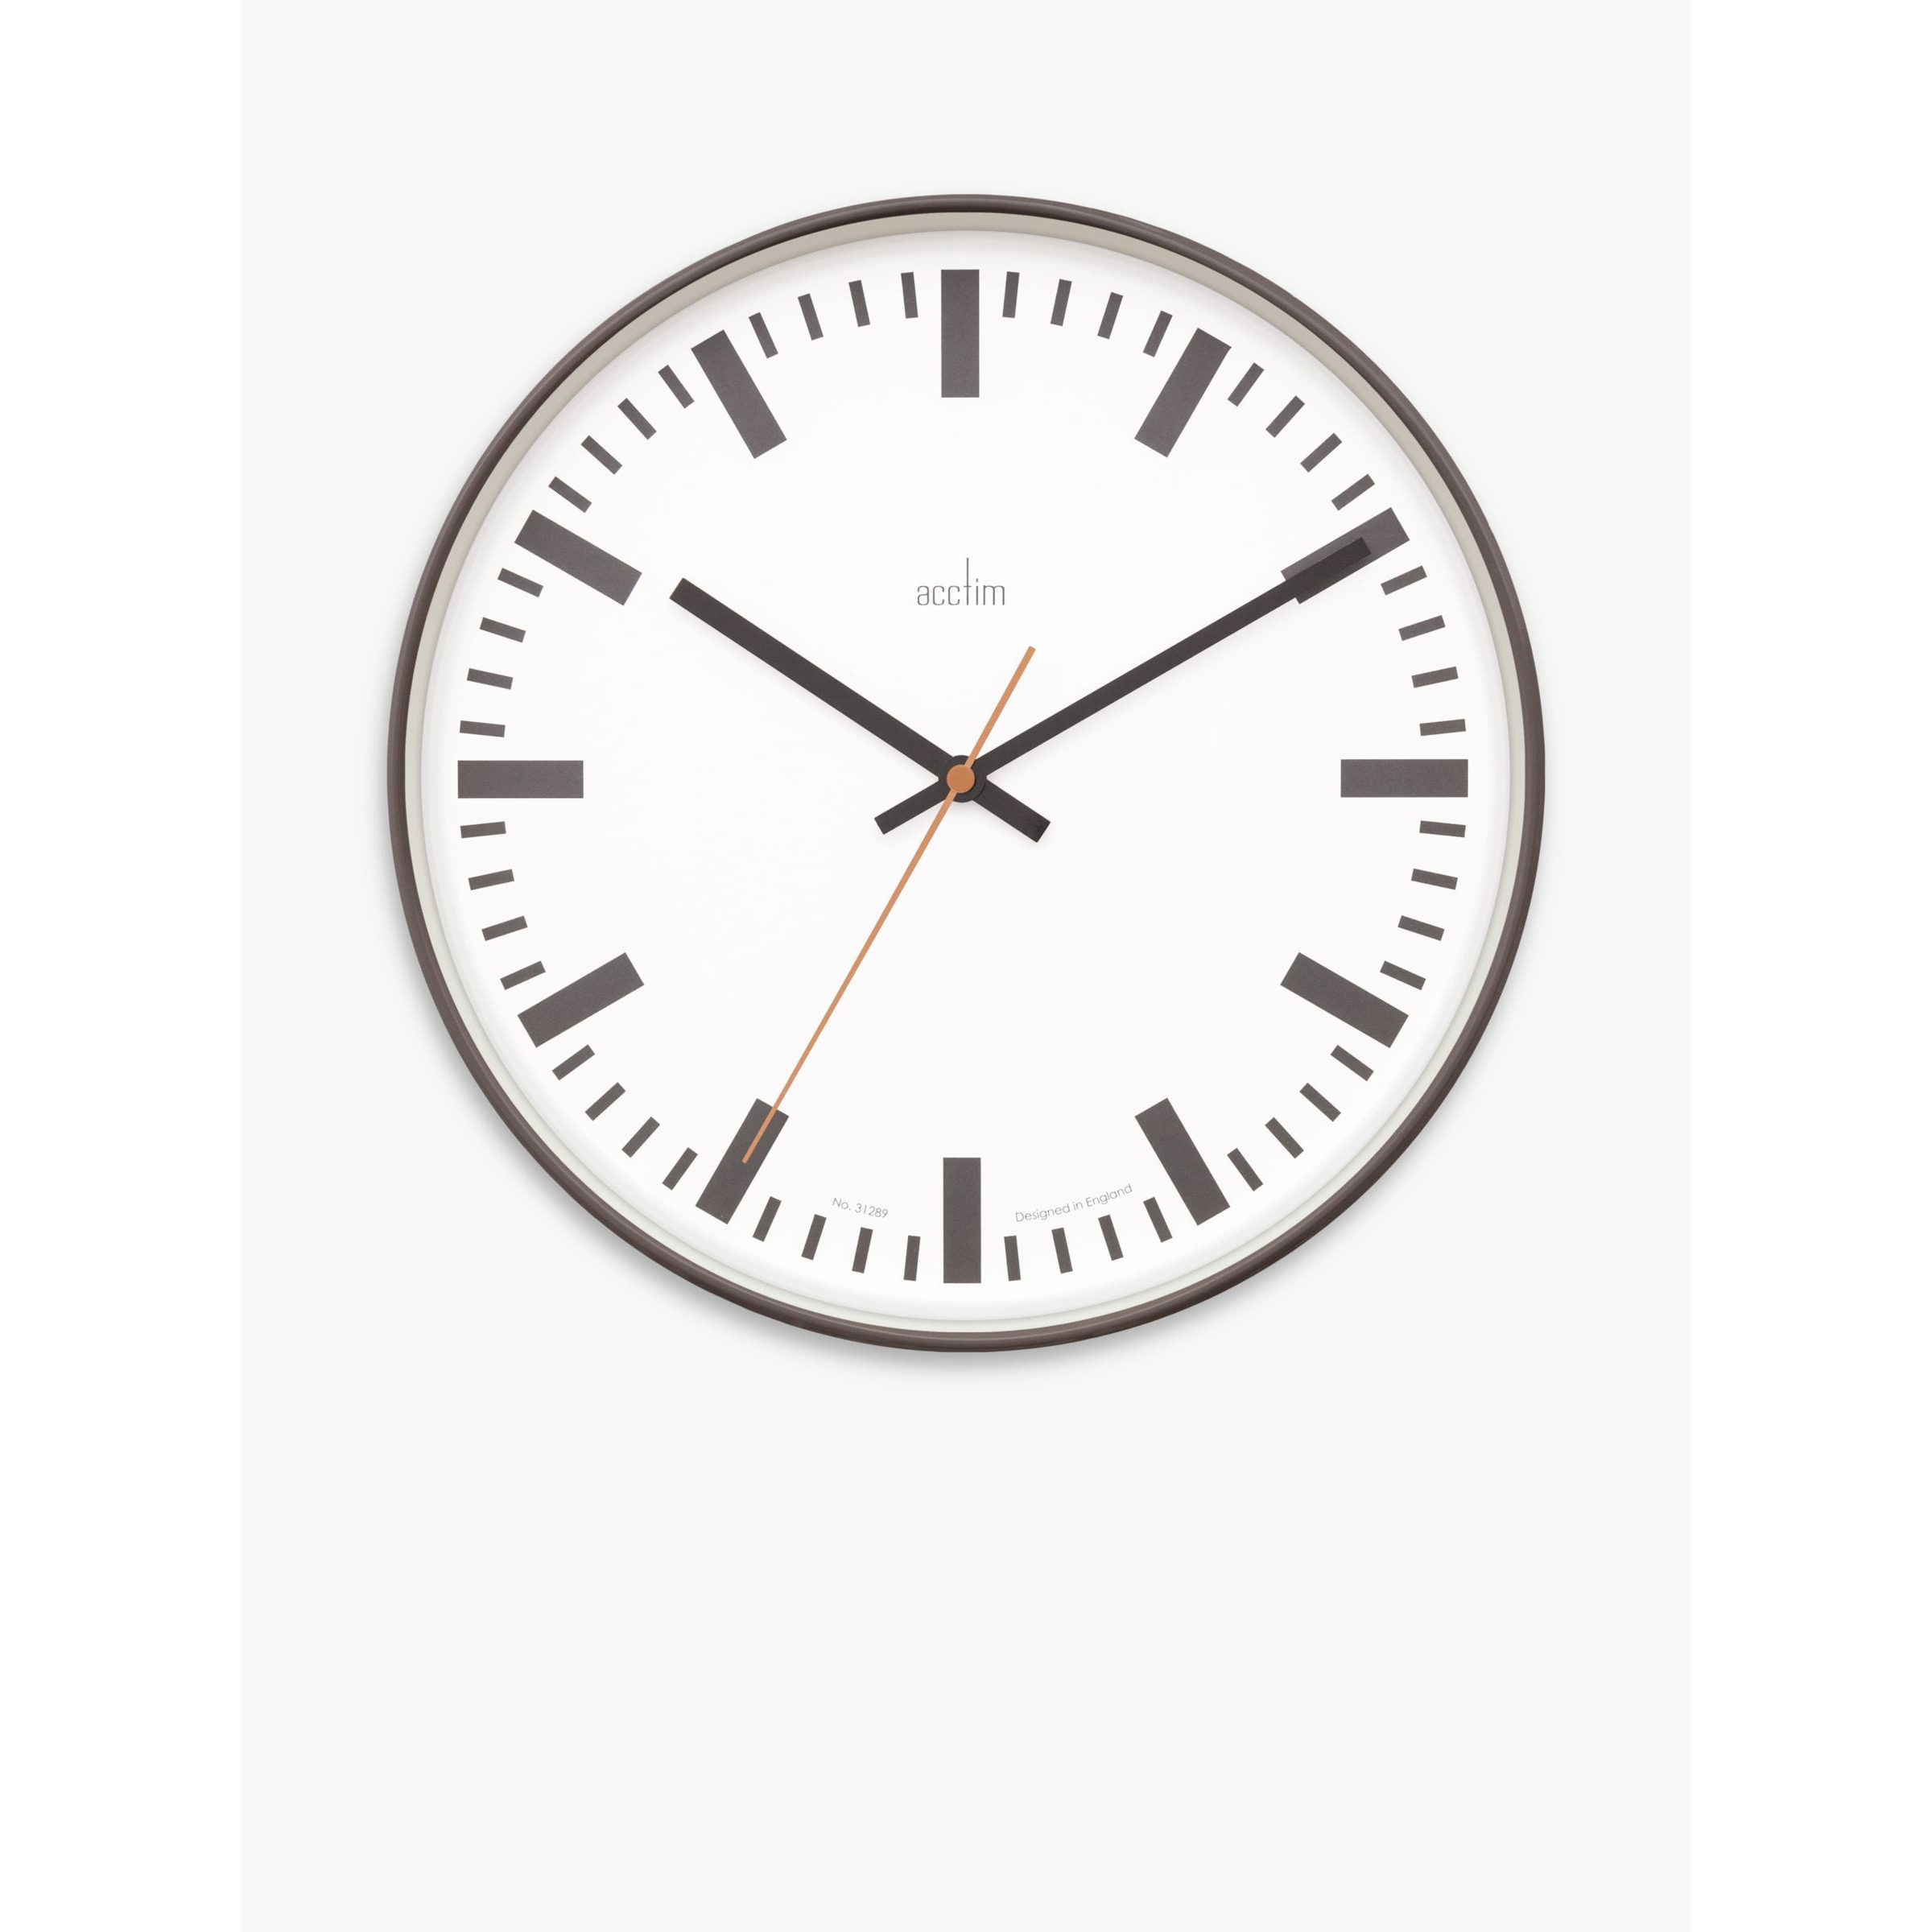 Acctim Victor Analogue Quartz Wall Clock, 30cm, London Sky - image 1